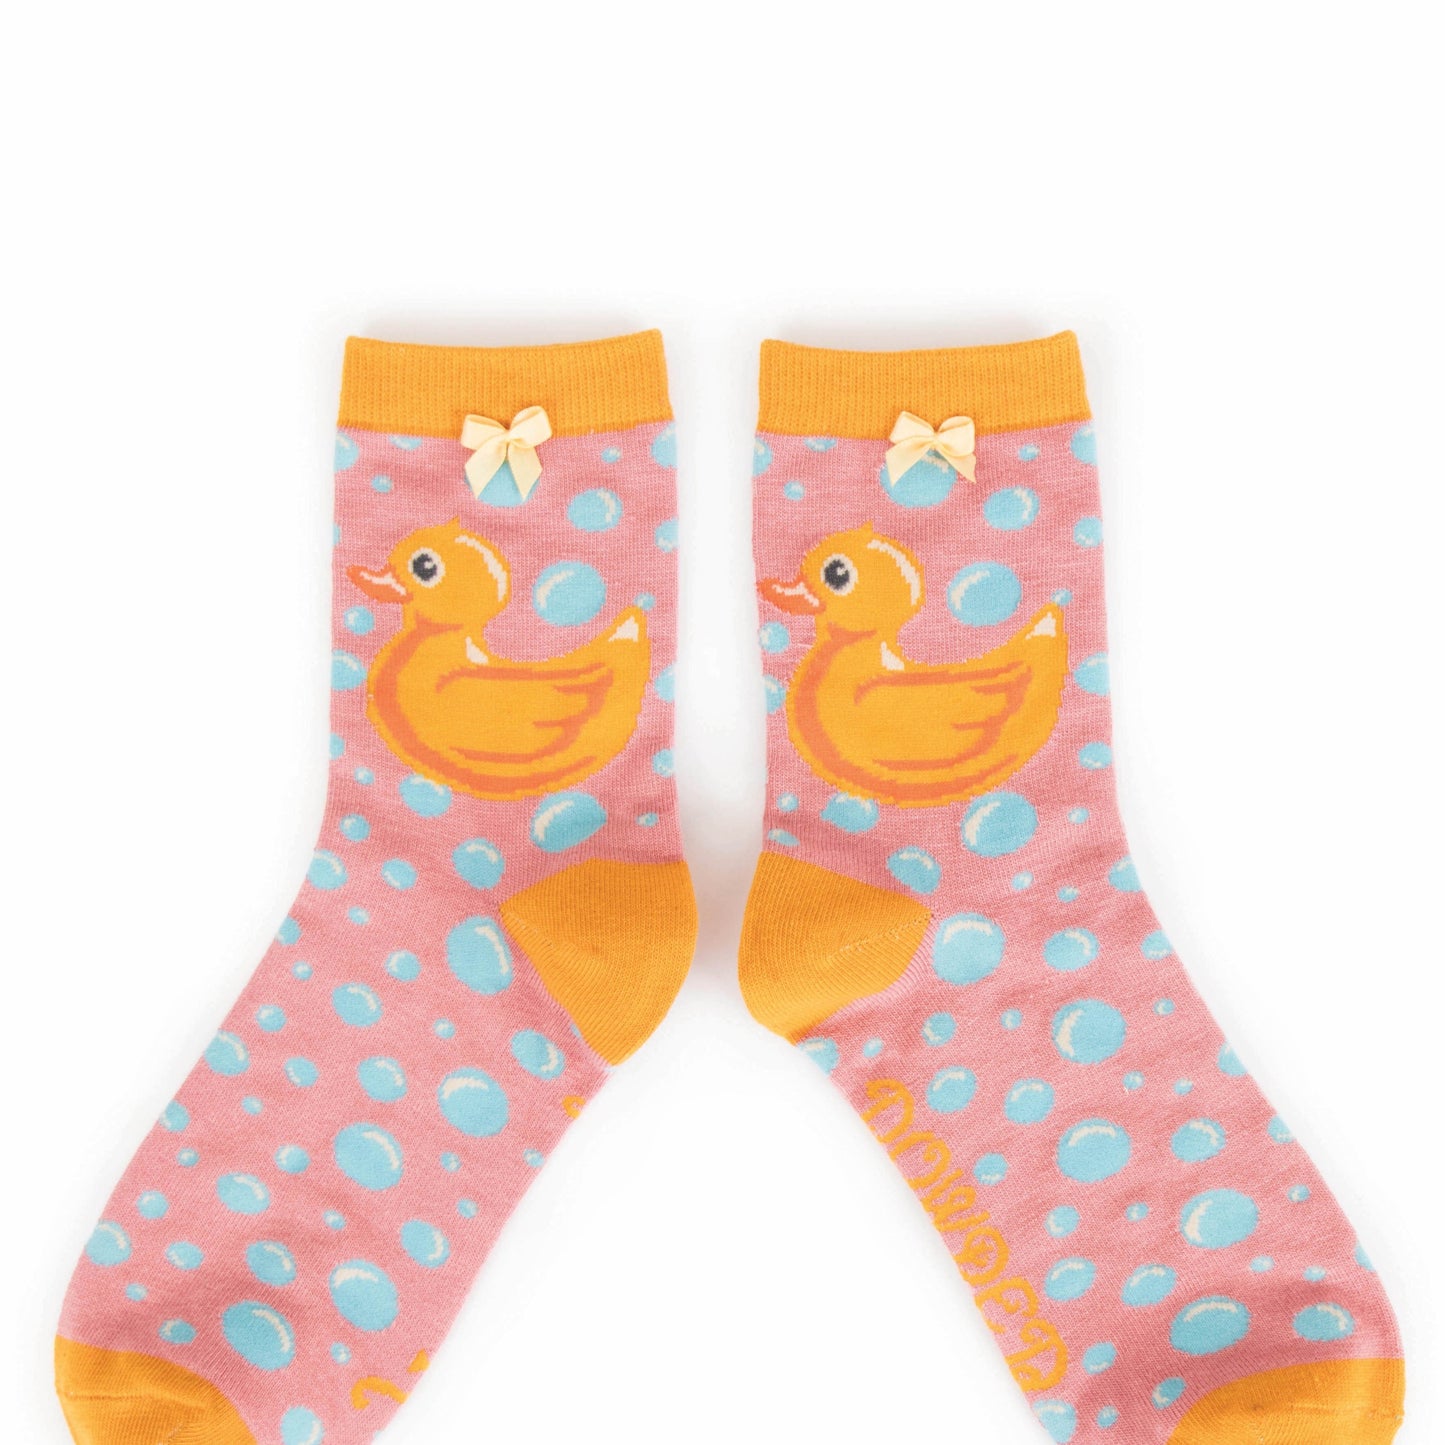 Rubber sucks Ankle Socks - Eve & Flamingo